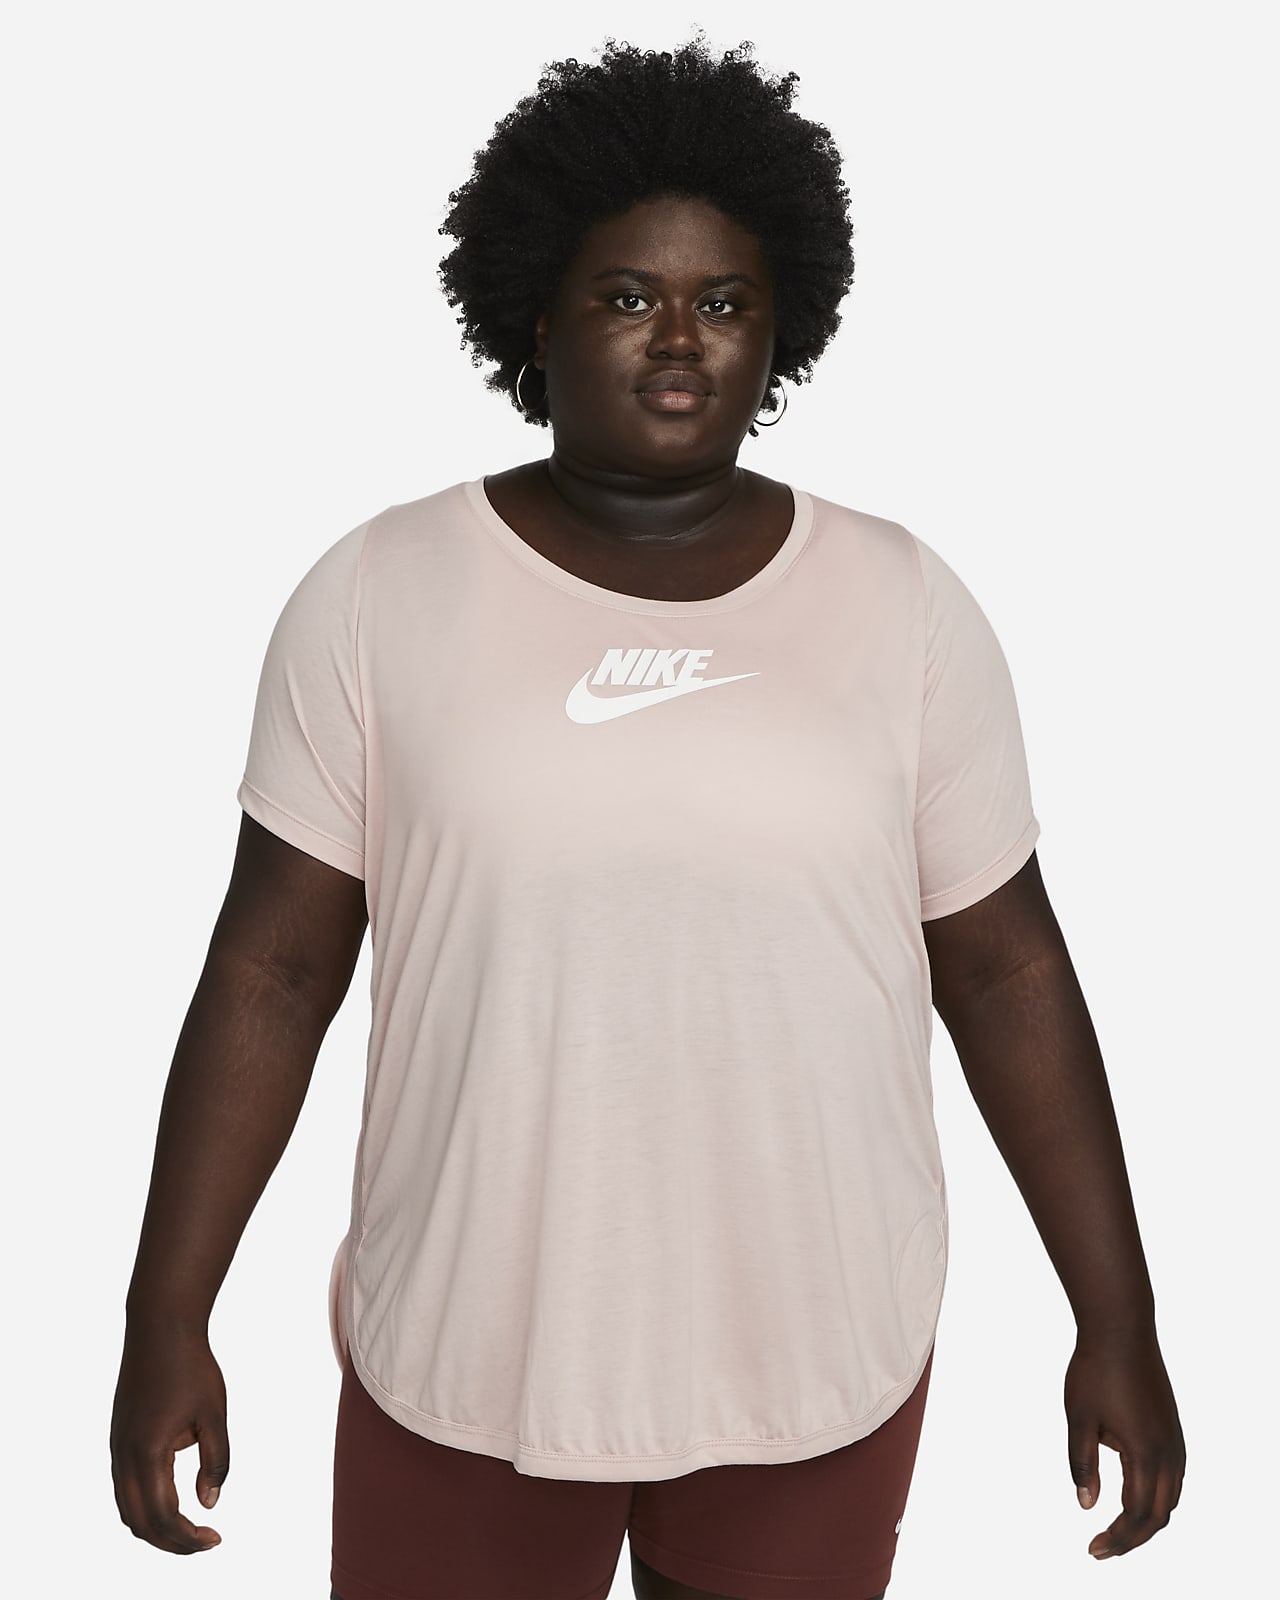 Nike Essential Women's Tunic (Plus Size).